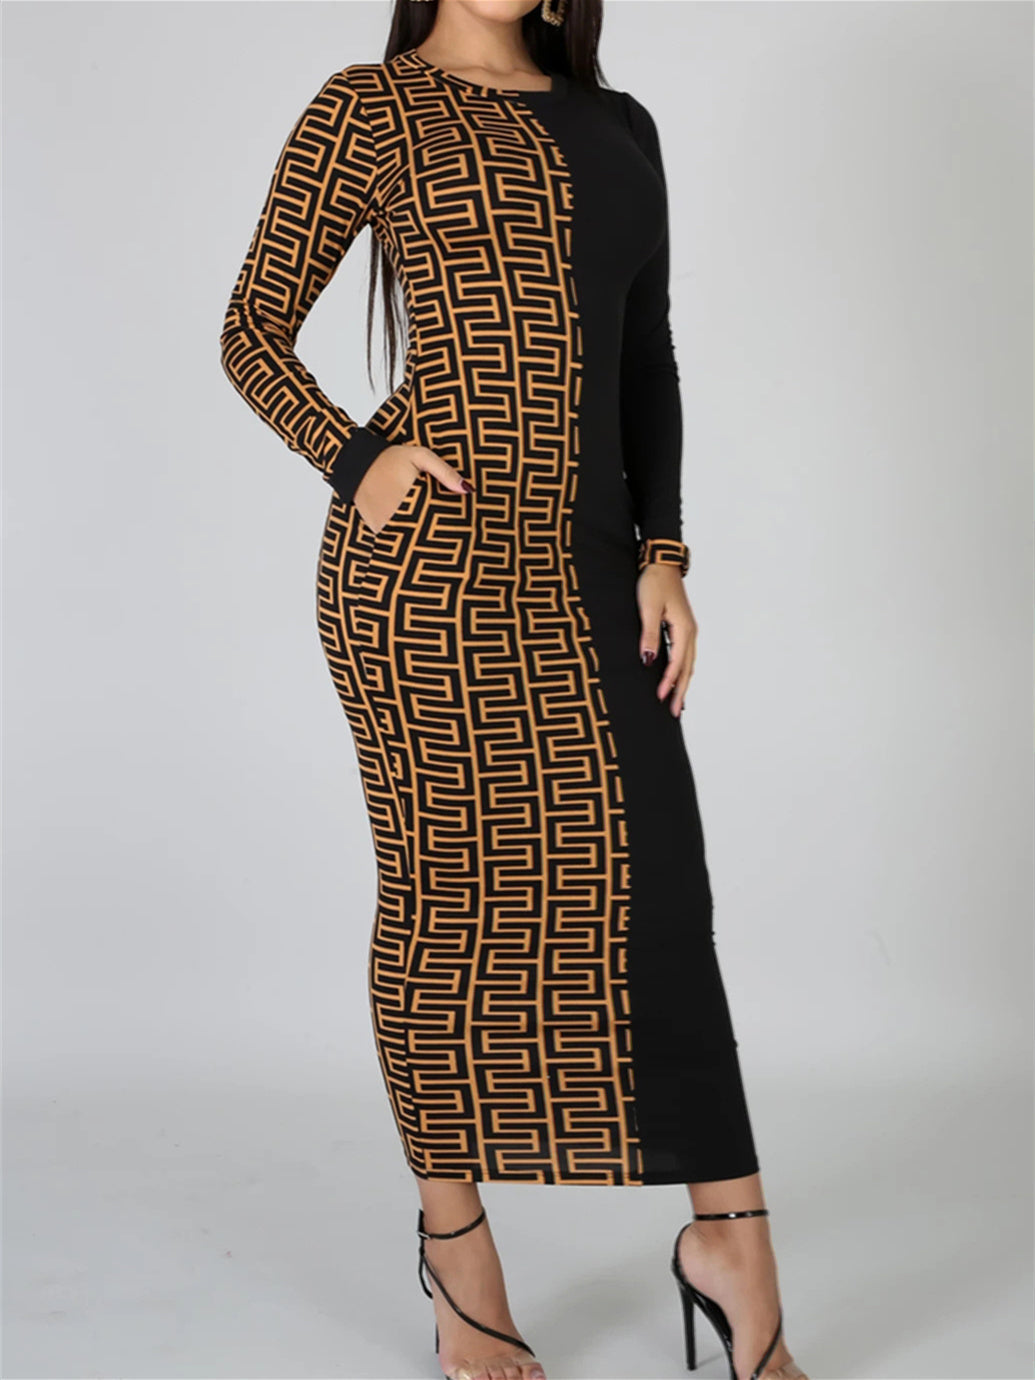 Women's Long Sleeve Scoop Neck Colorblock Graphic Printed Midi Dress